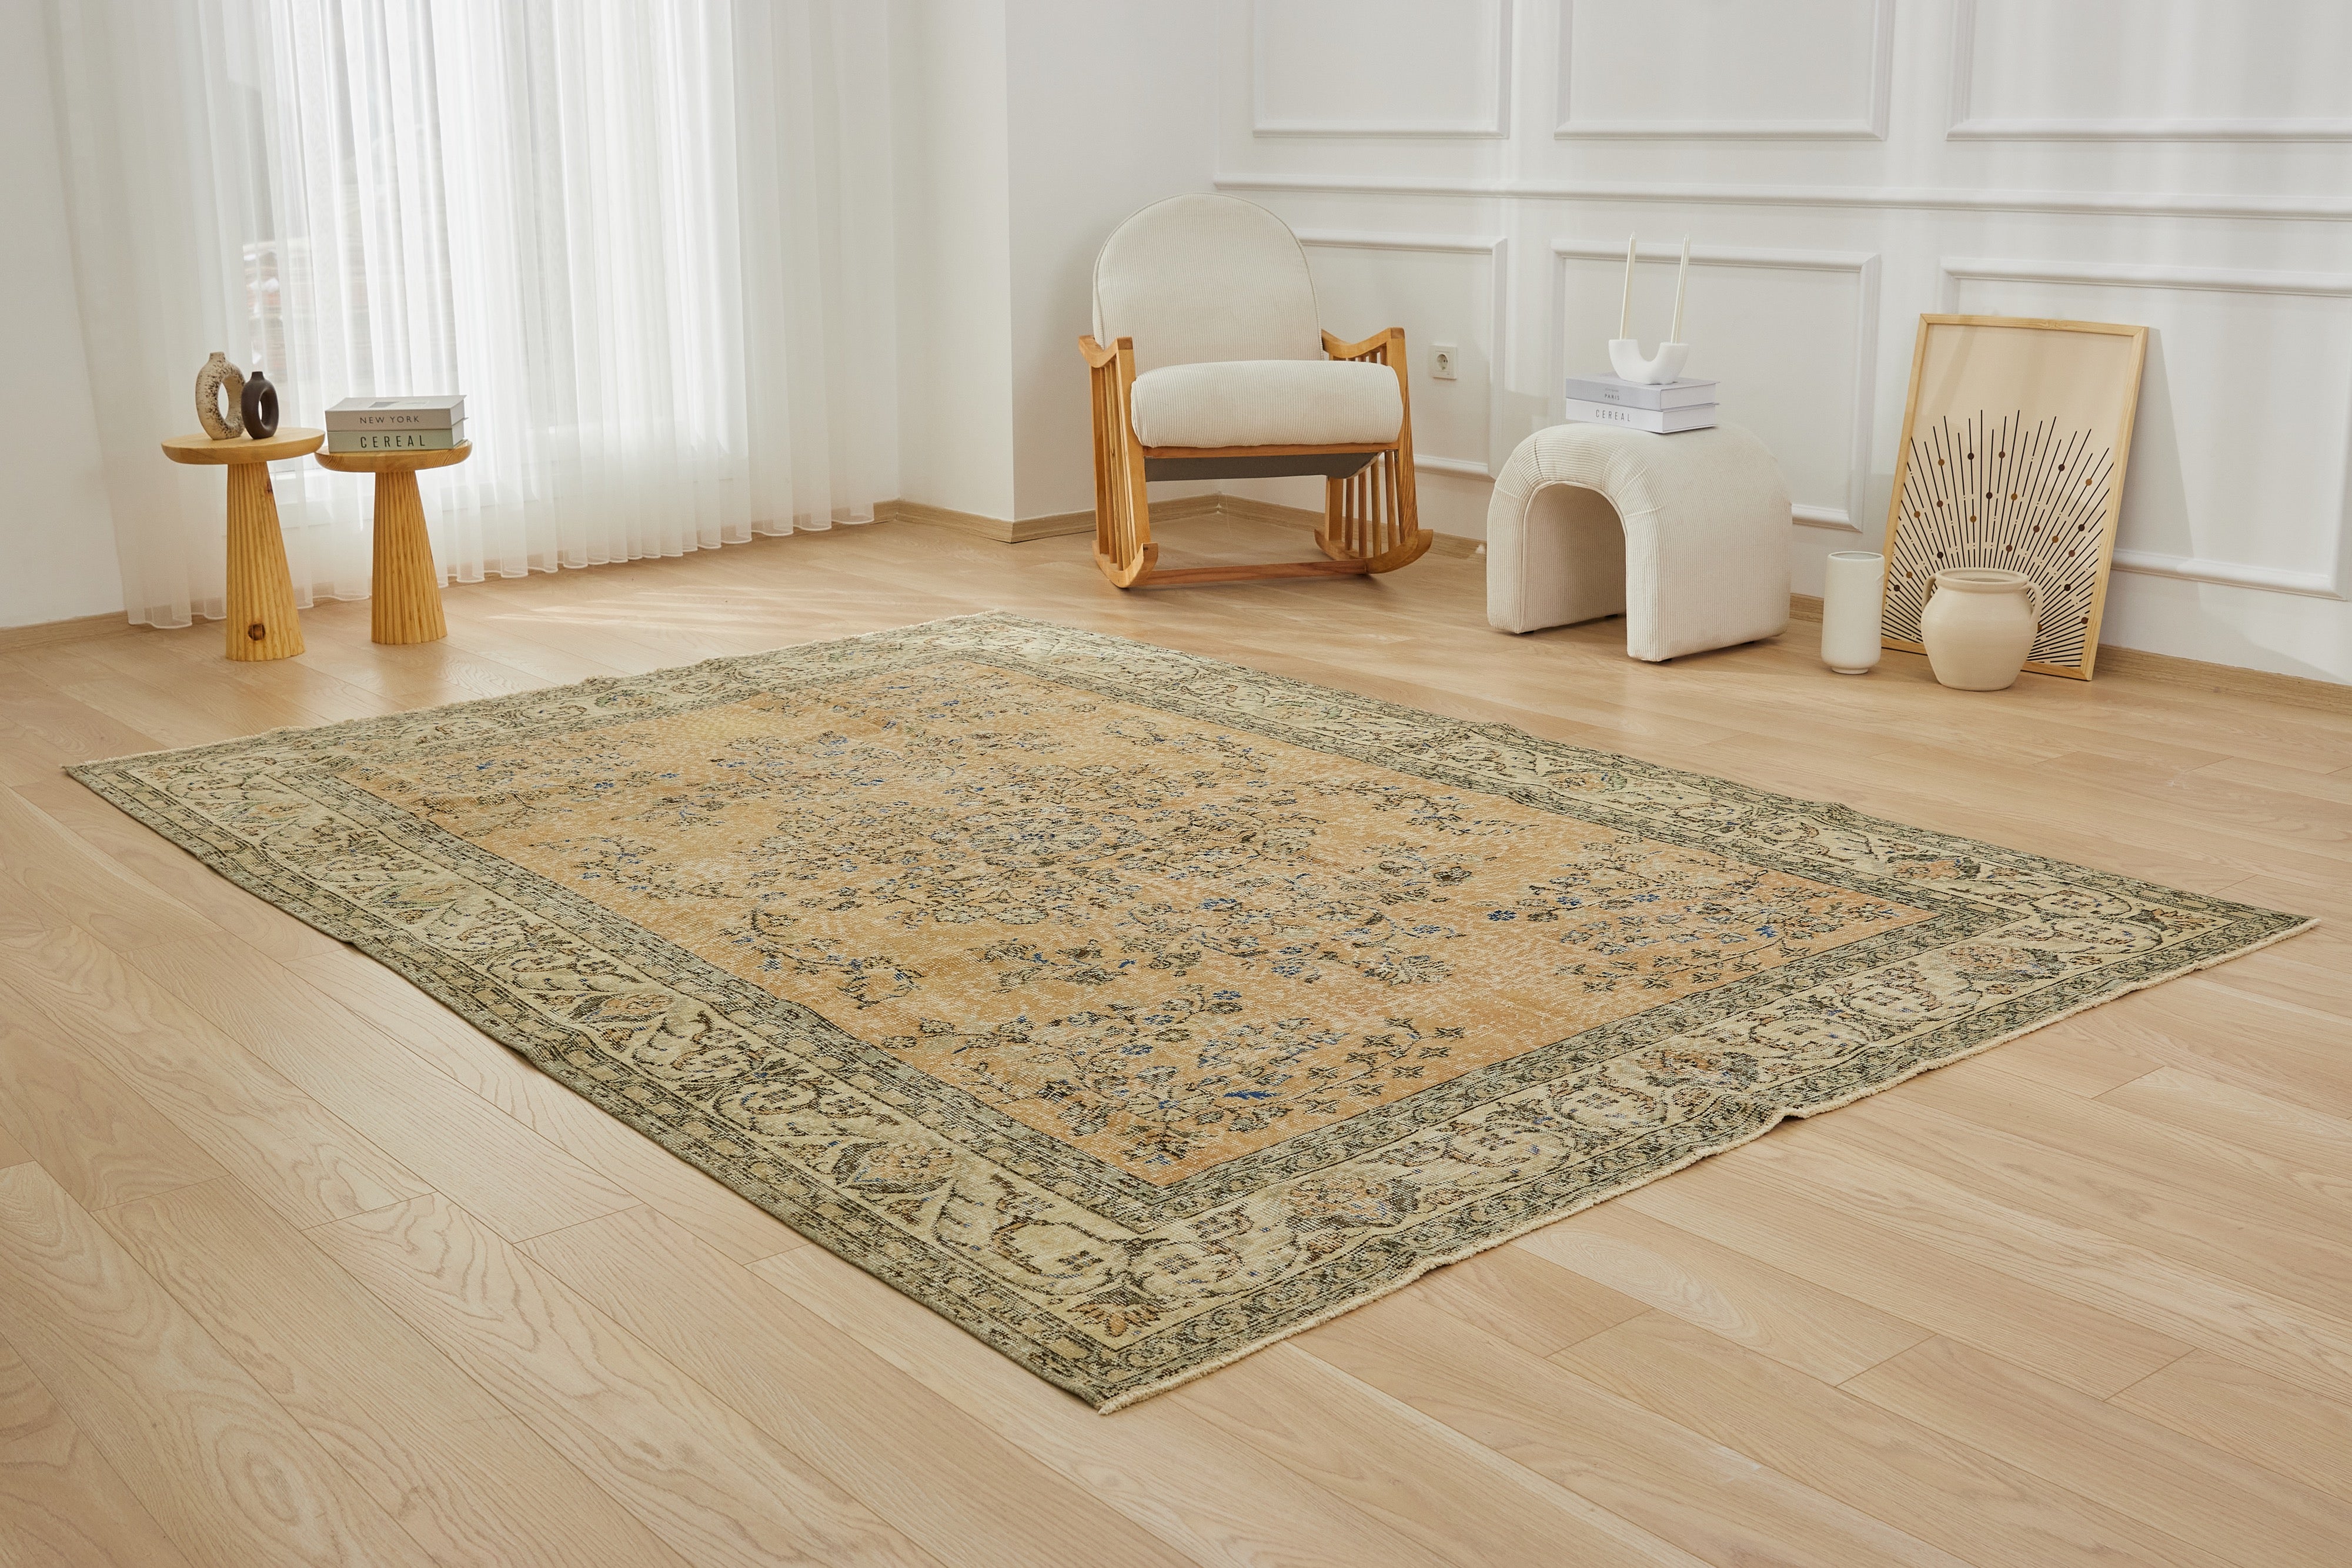 Antique washed Vibrancy - Vania's Professional Carpet Craft